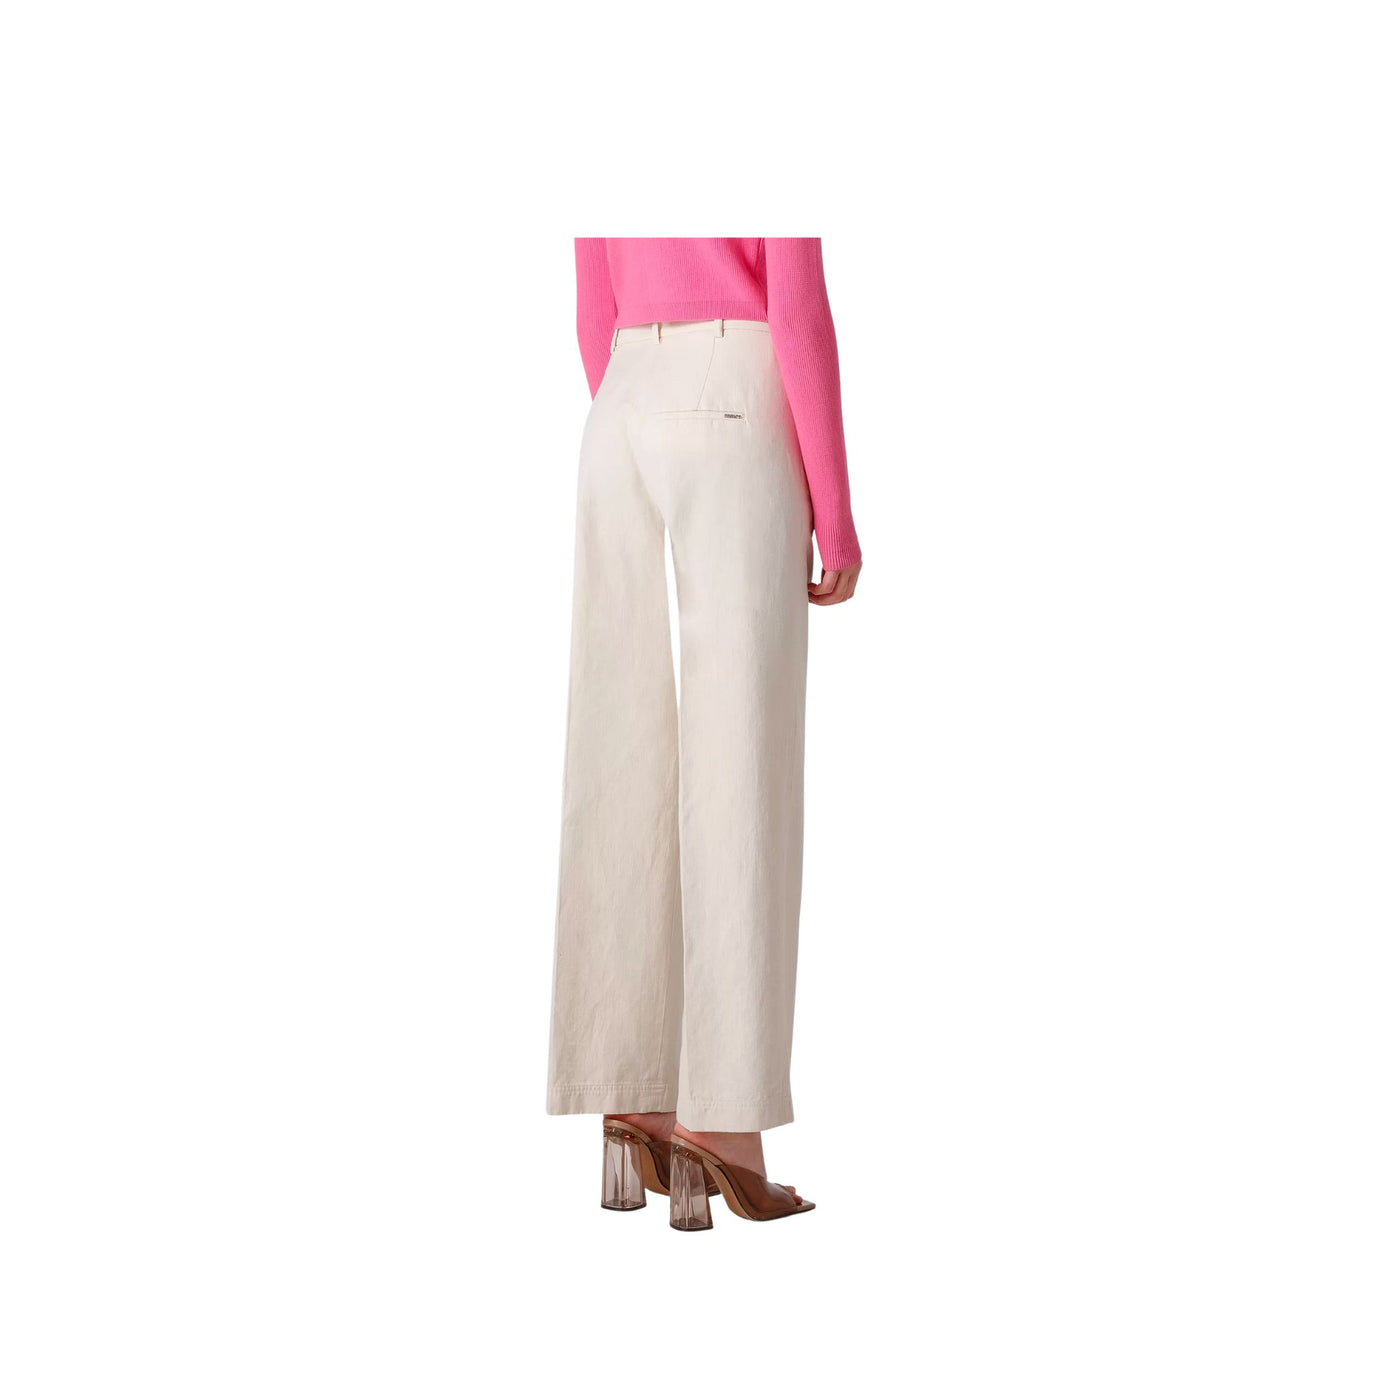 High-waisted women's trousers in malfilè fabric